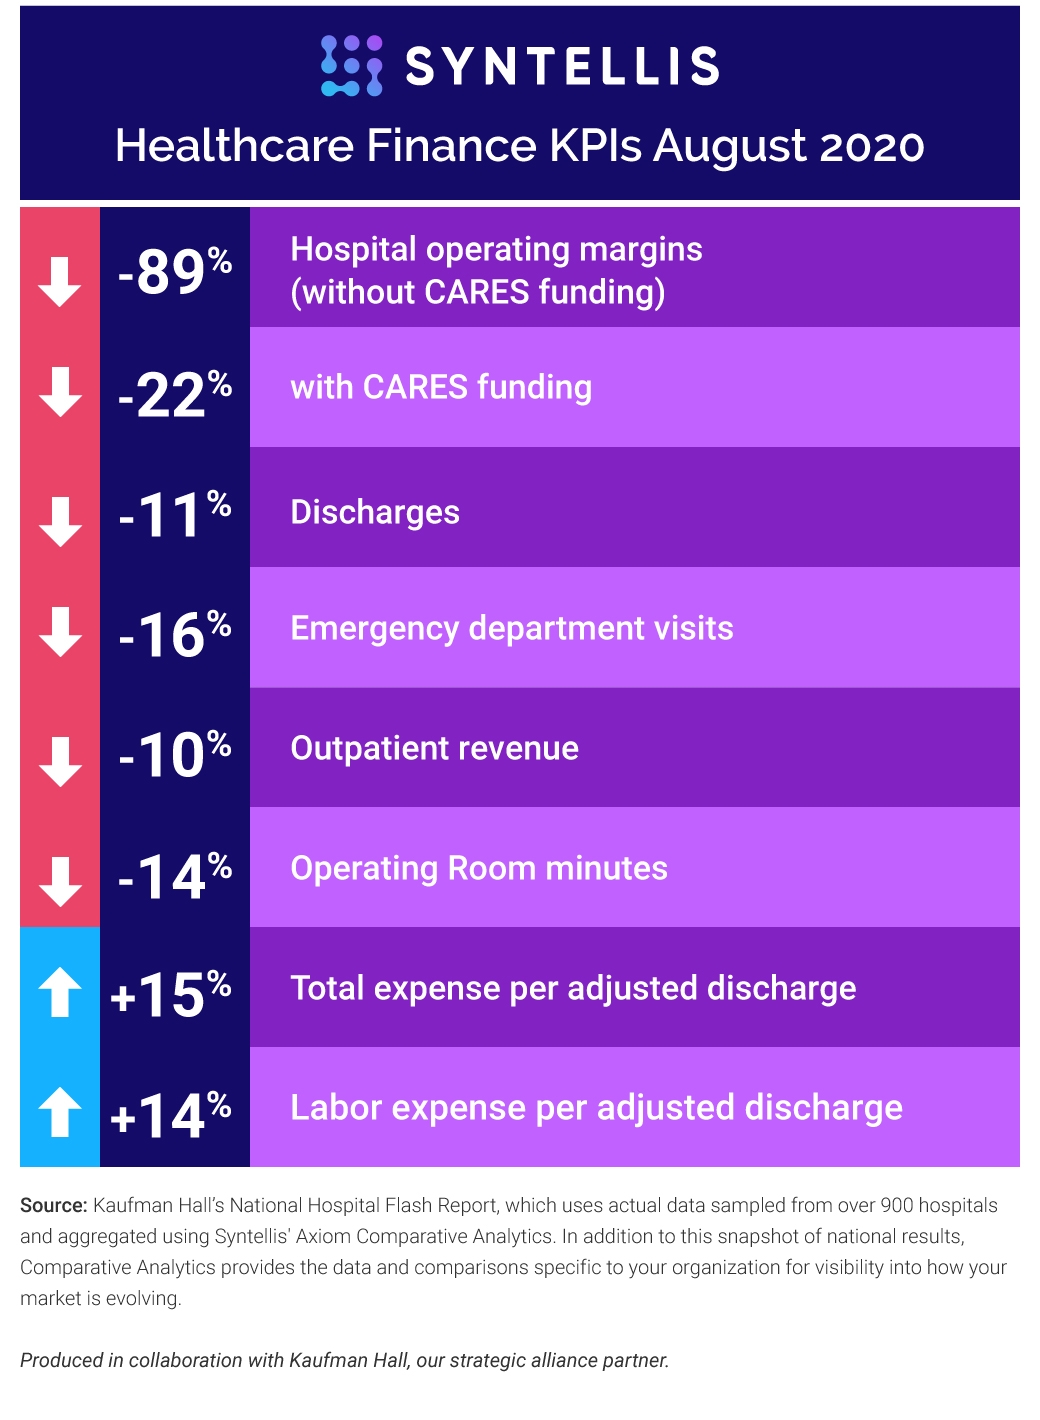 Healthcare Finance KPIs - August 2020